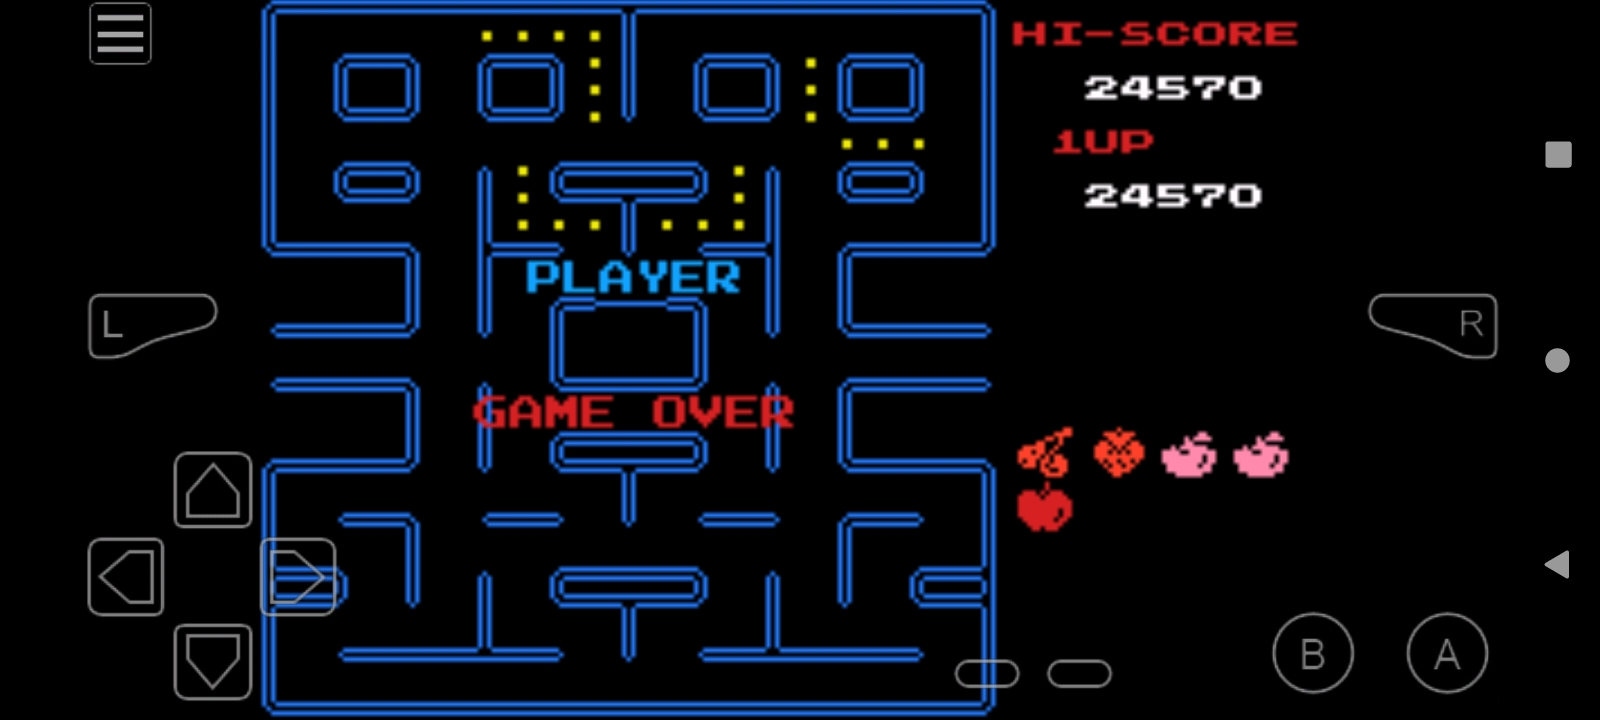 Hauntedprogram: Famicom Mini Vol. 6: Pac-Man (GBA Emulated) 24,570 points on 2022-08-12 20:16:18